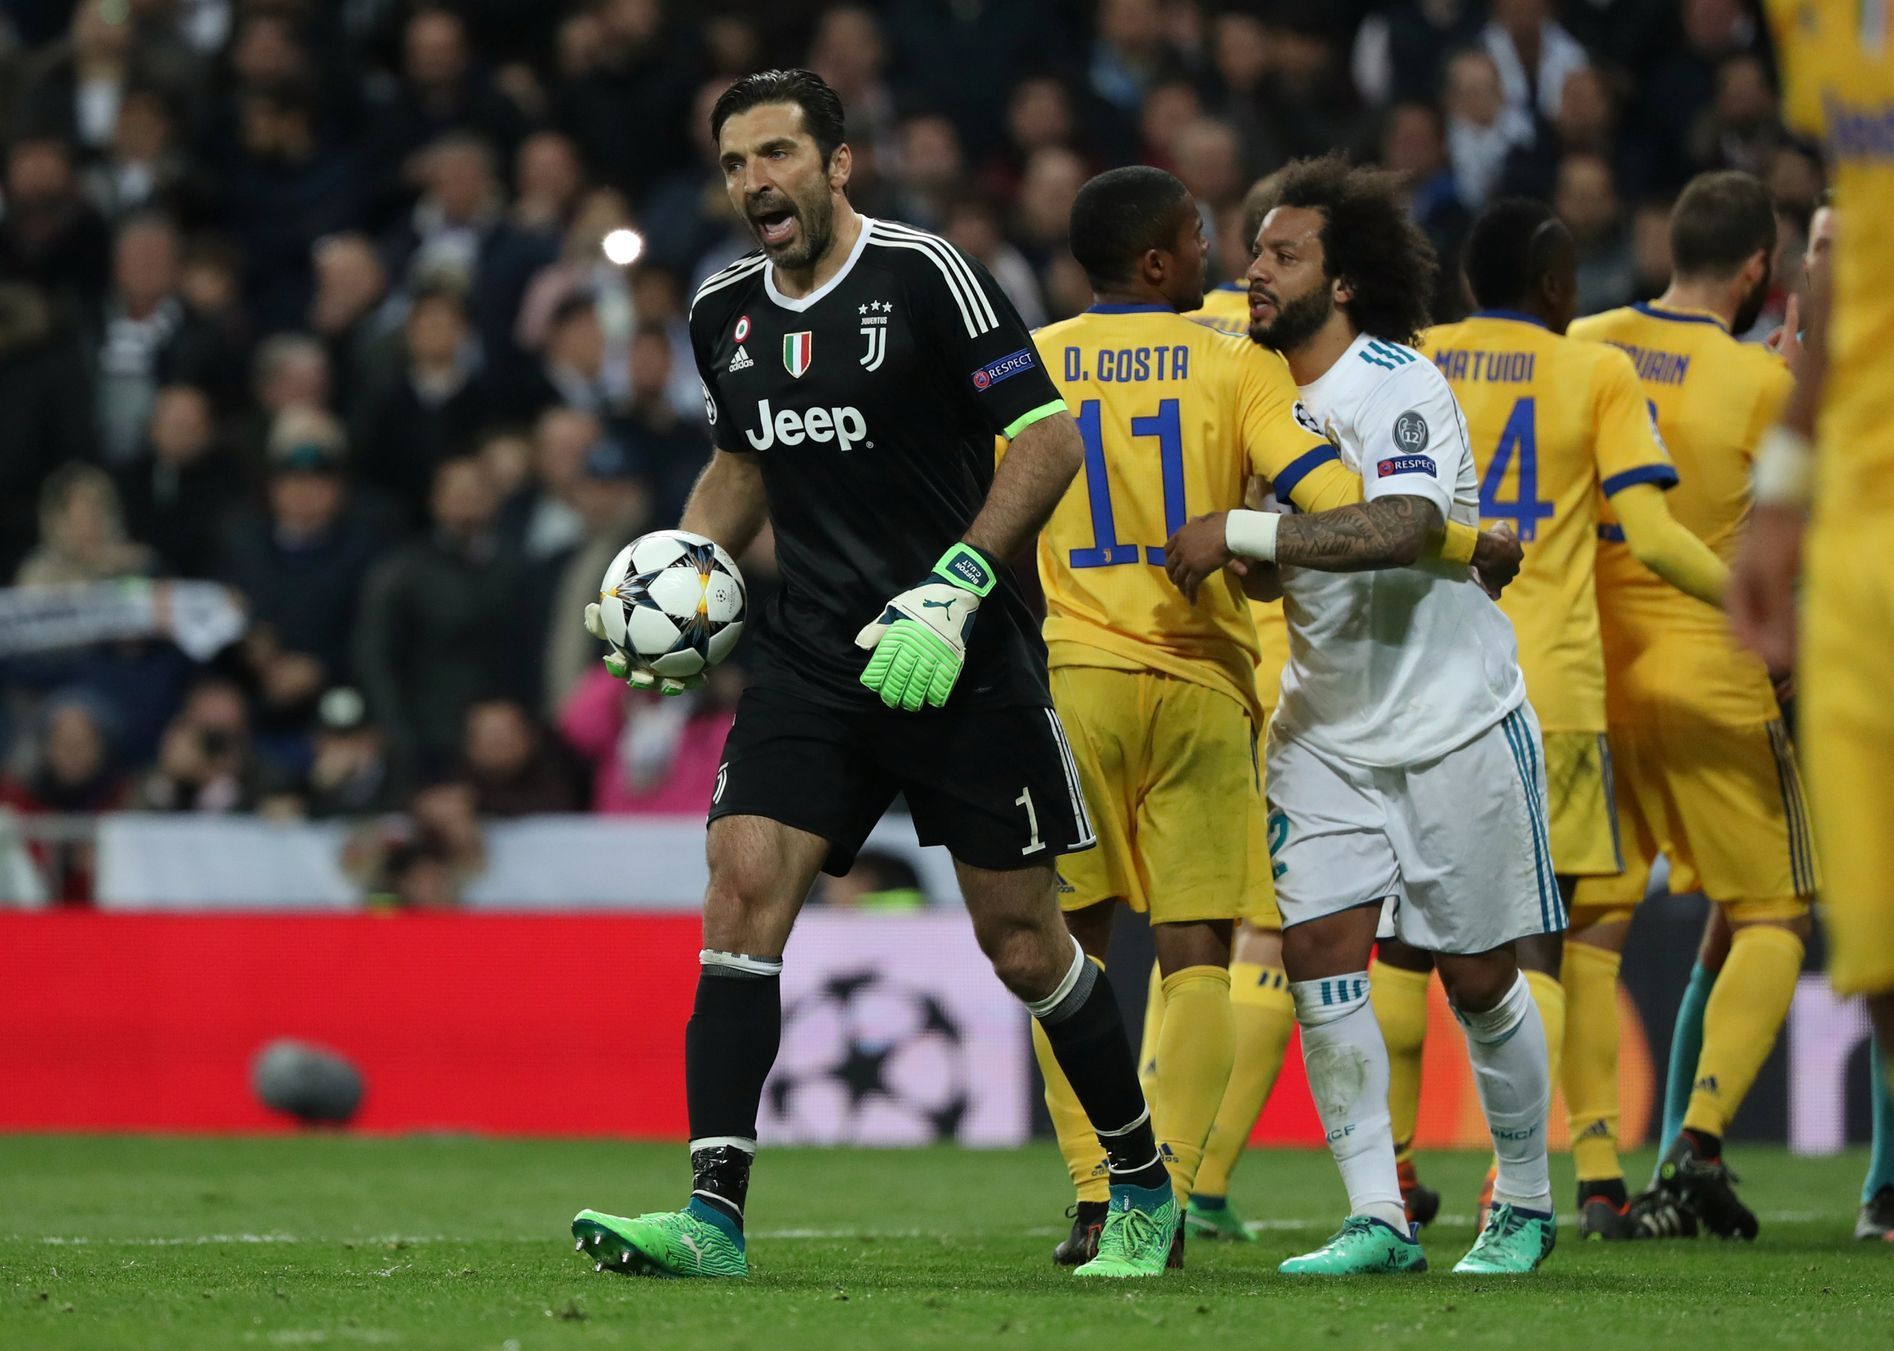 fotbal, Liga mistrů 2017/2018, Real Madrid - Juventus Turín, Gianluigi Buffon